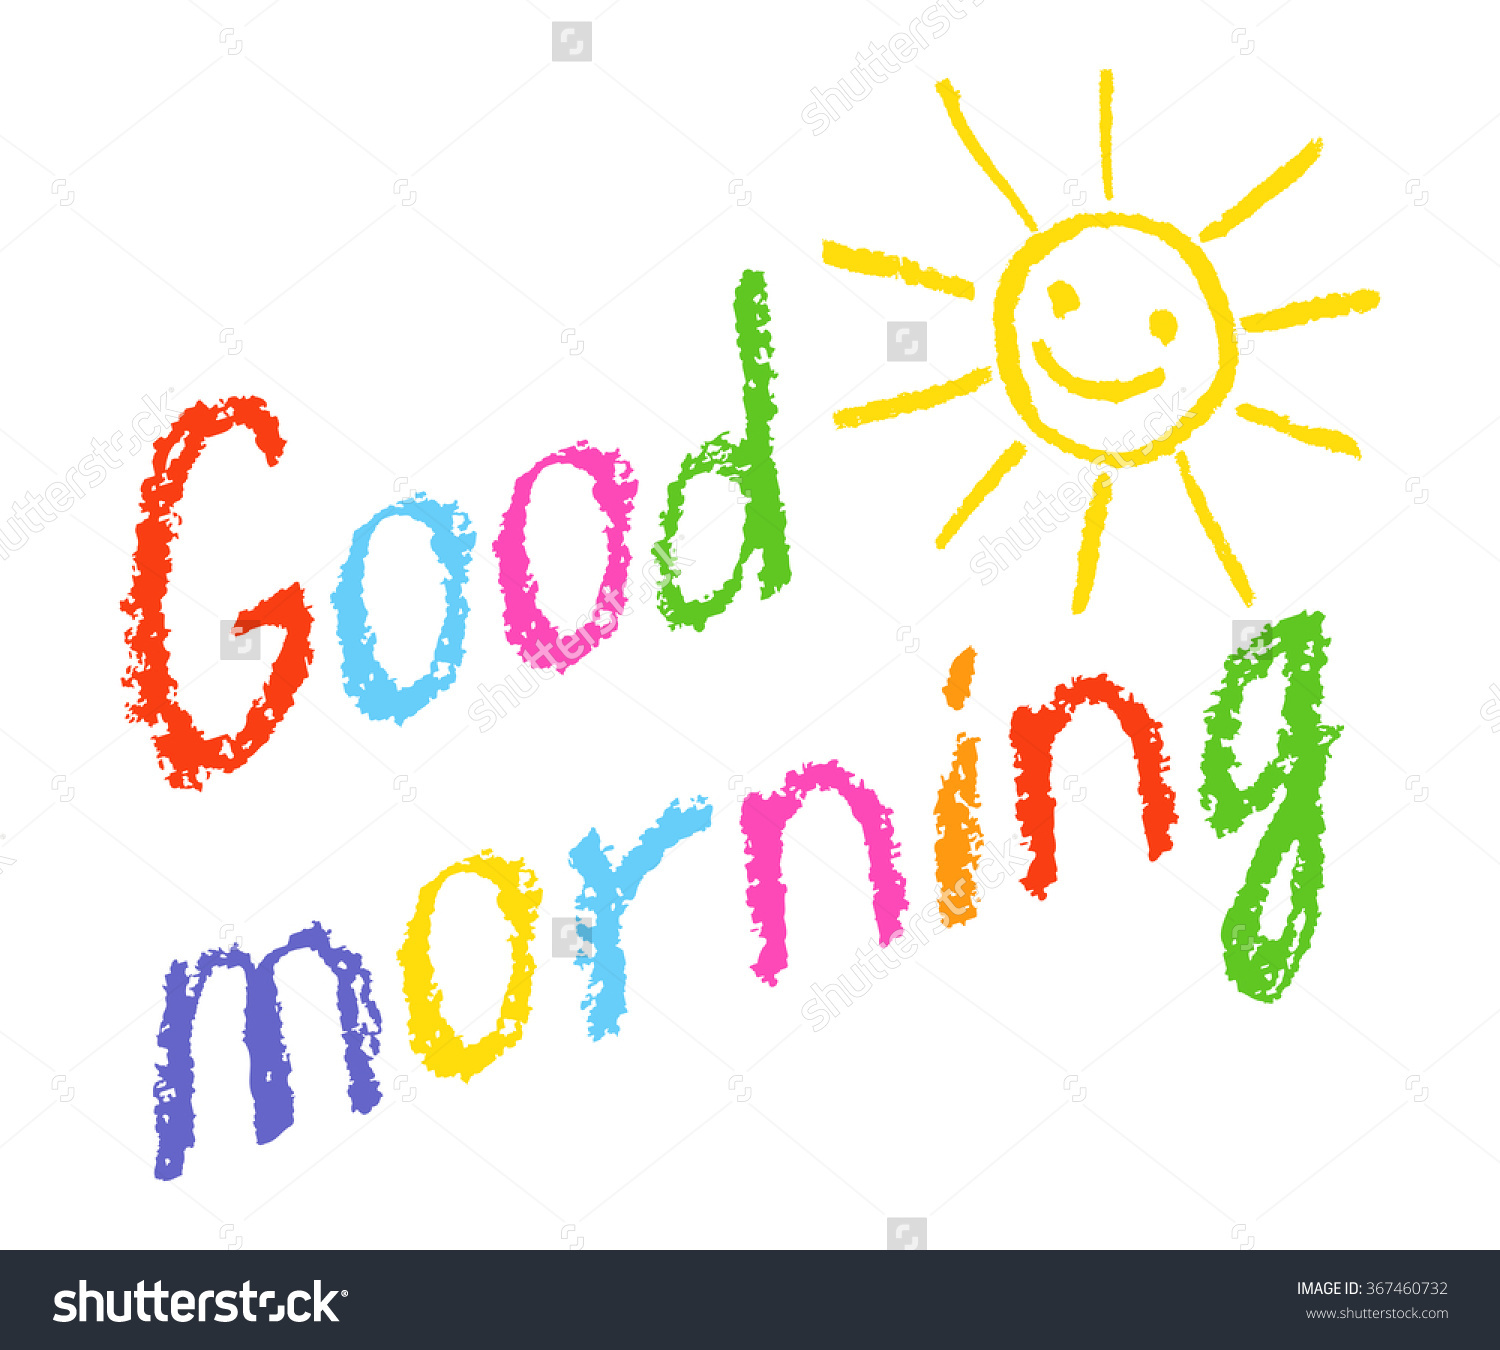 Morning clipart 7 good mornin